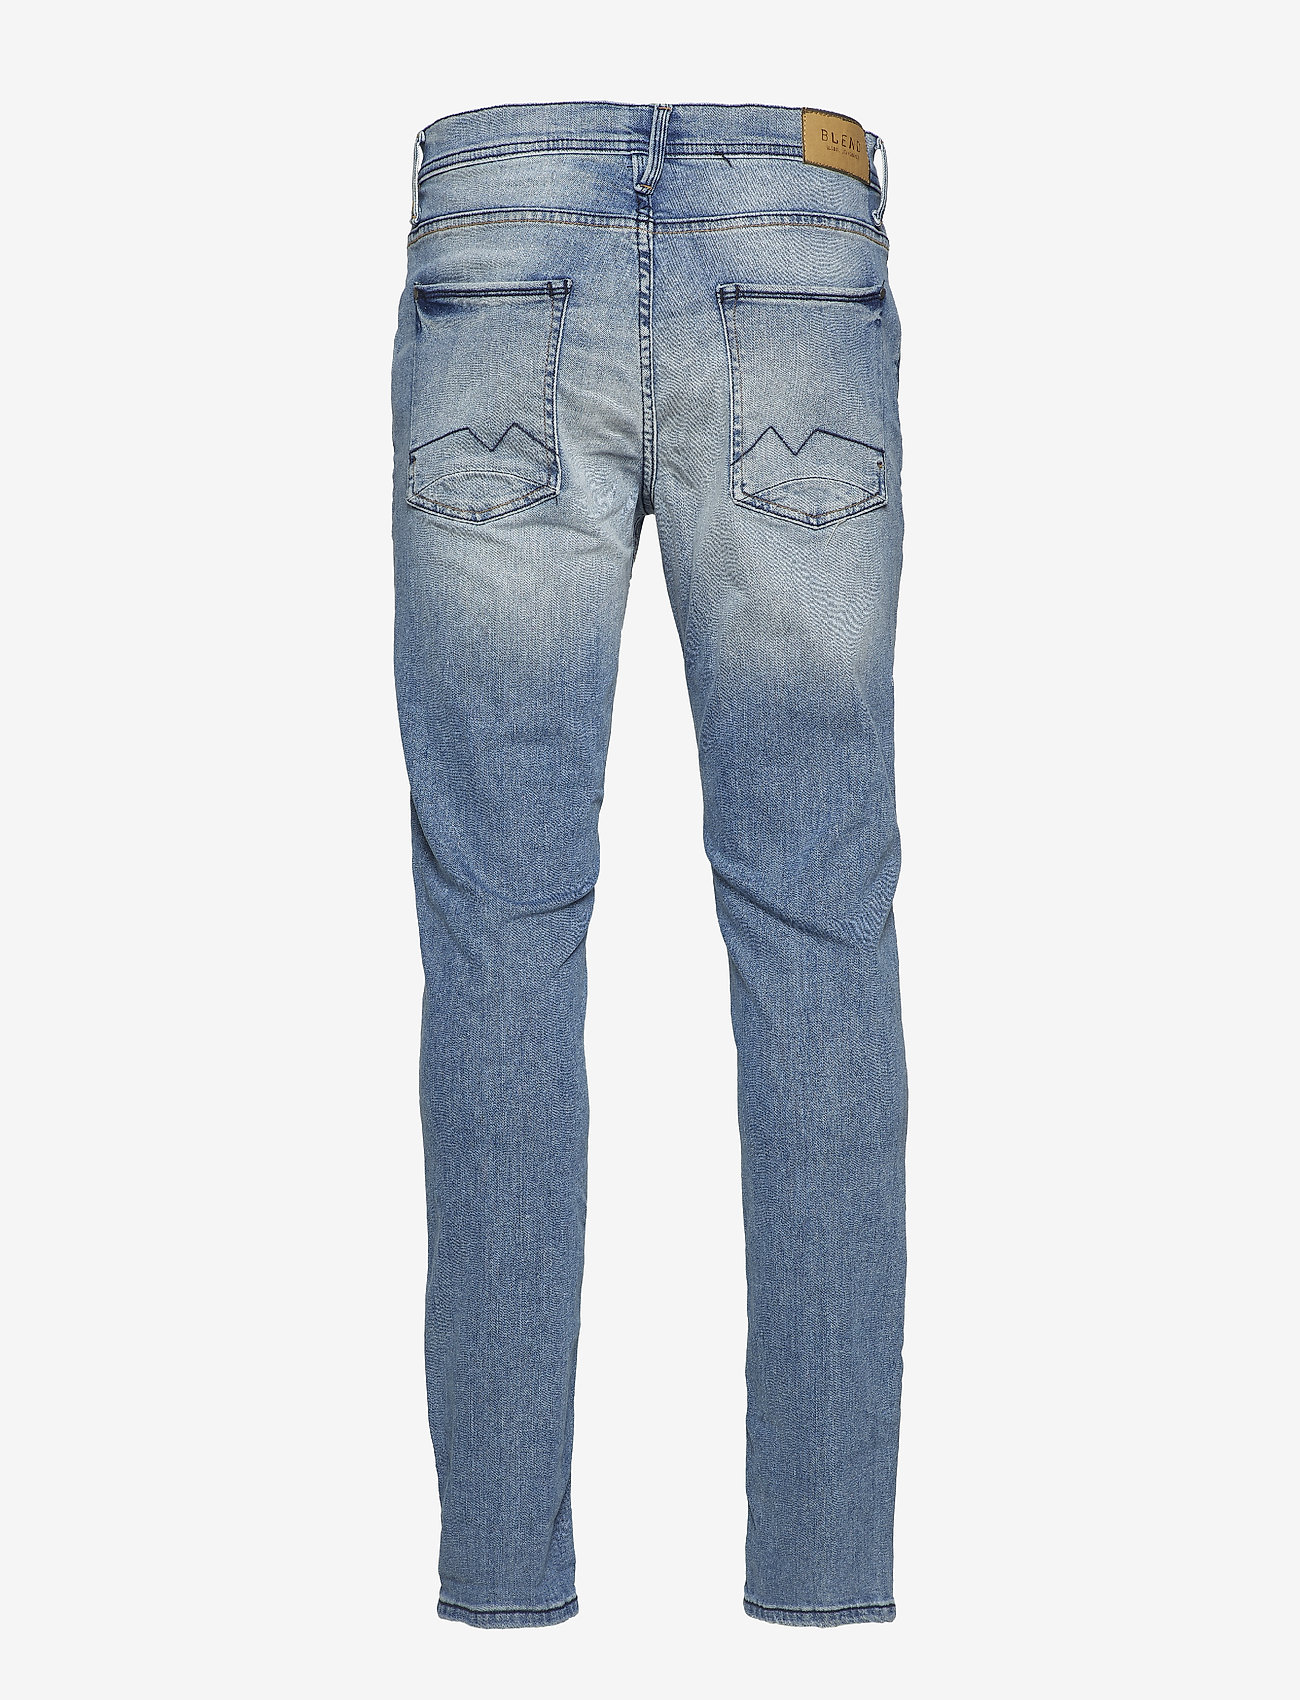 Twister Fit - Noos Jeans - Slim jeans Boozt.com